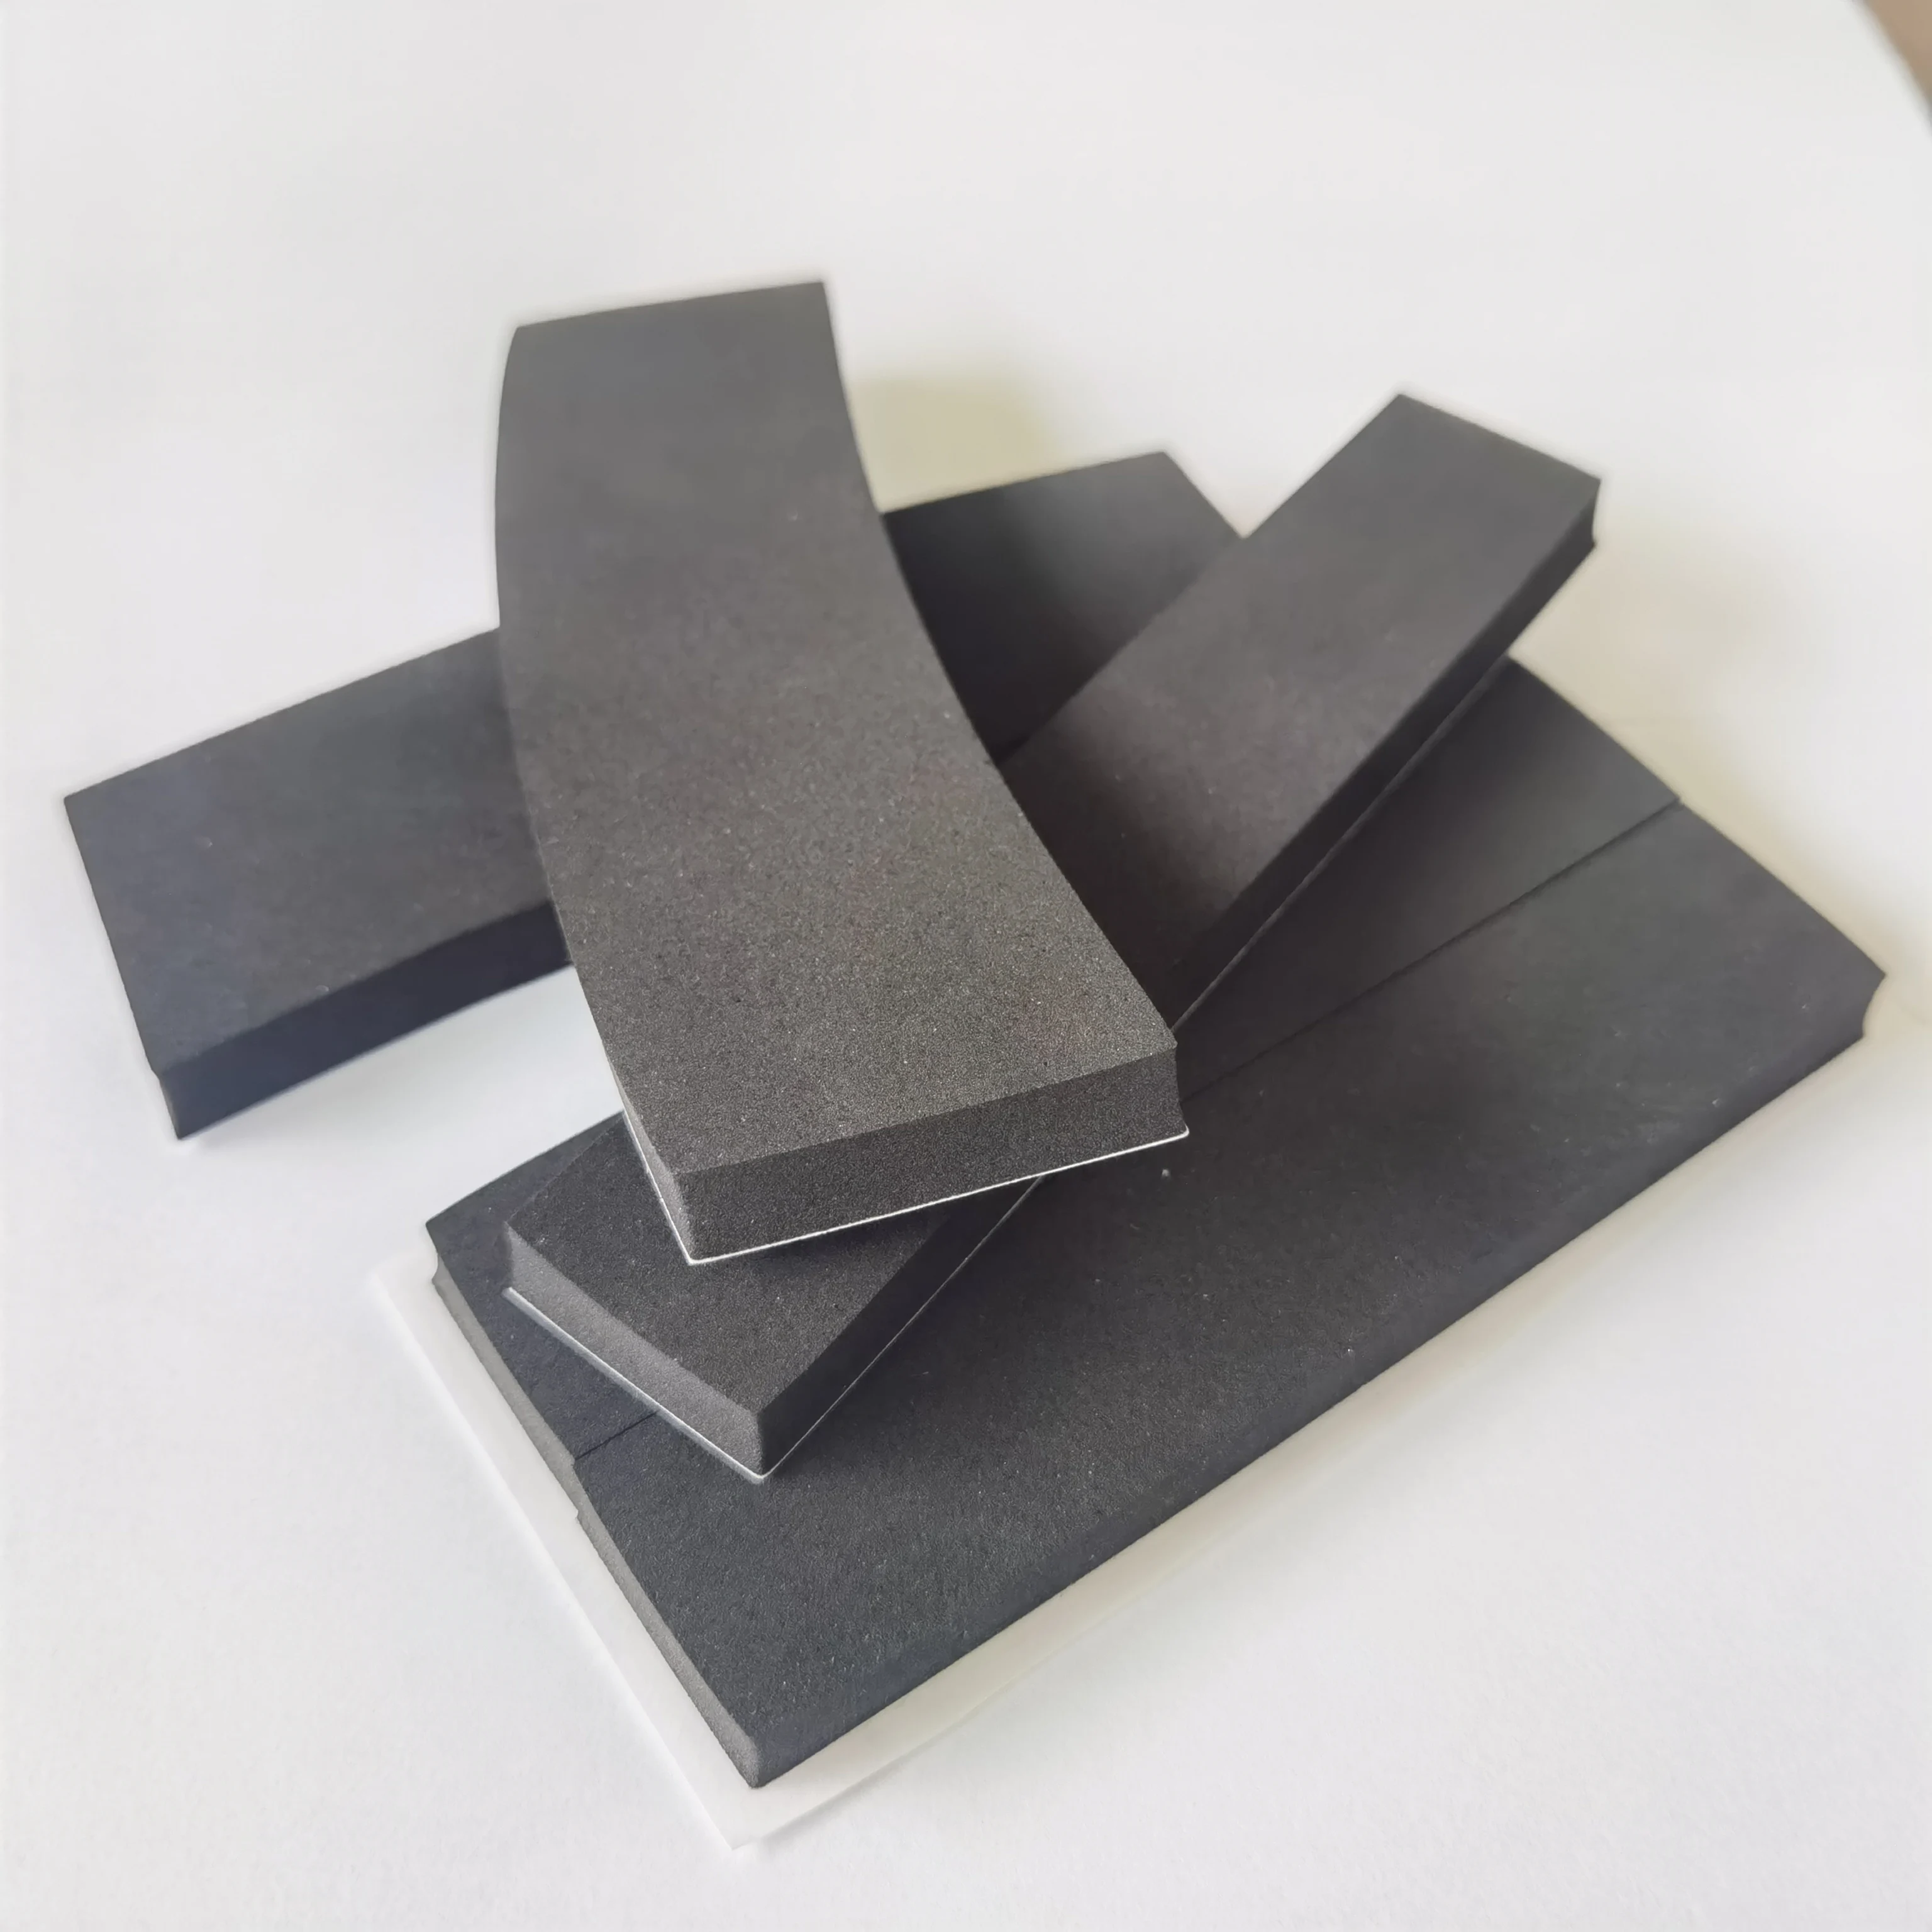 Scotch Permanent High-Density Foam Mounting Tape, Pre-Cut Squares, 2 x 2, White, 60/Pack